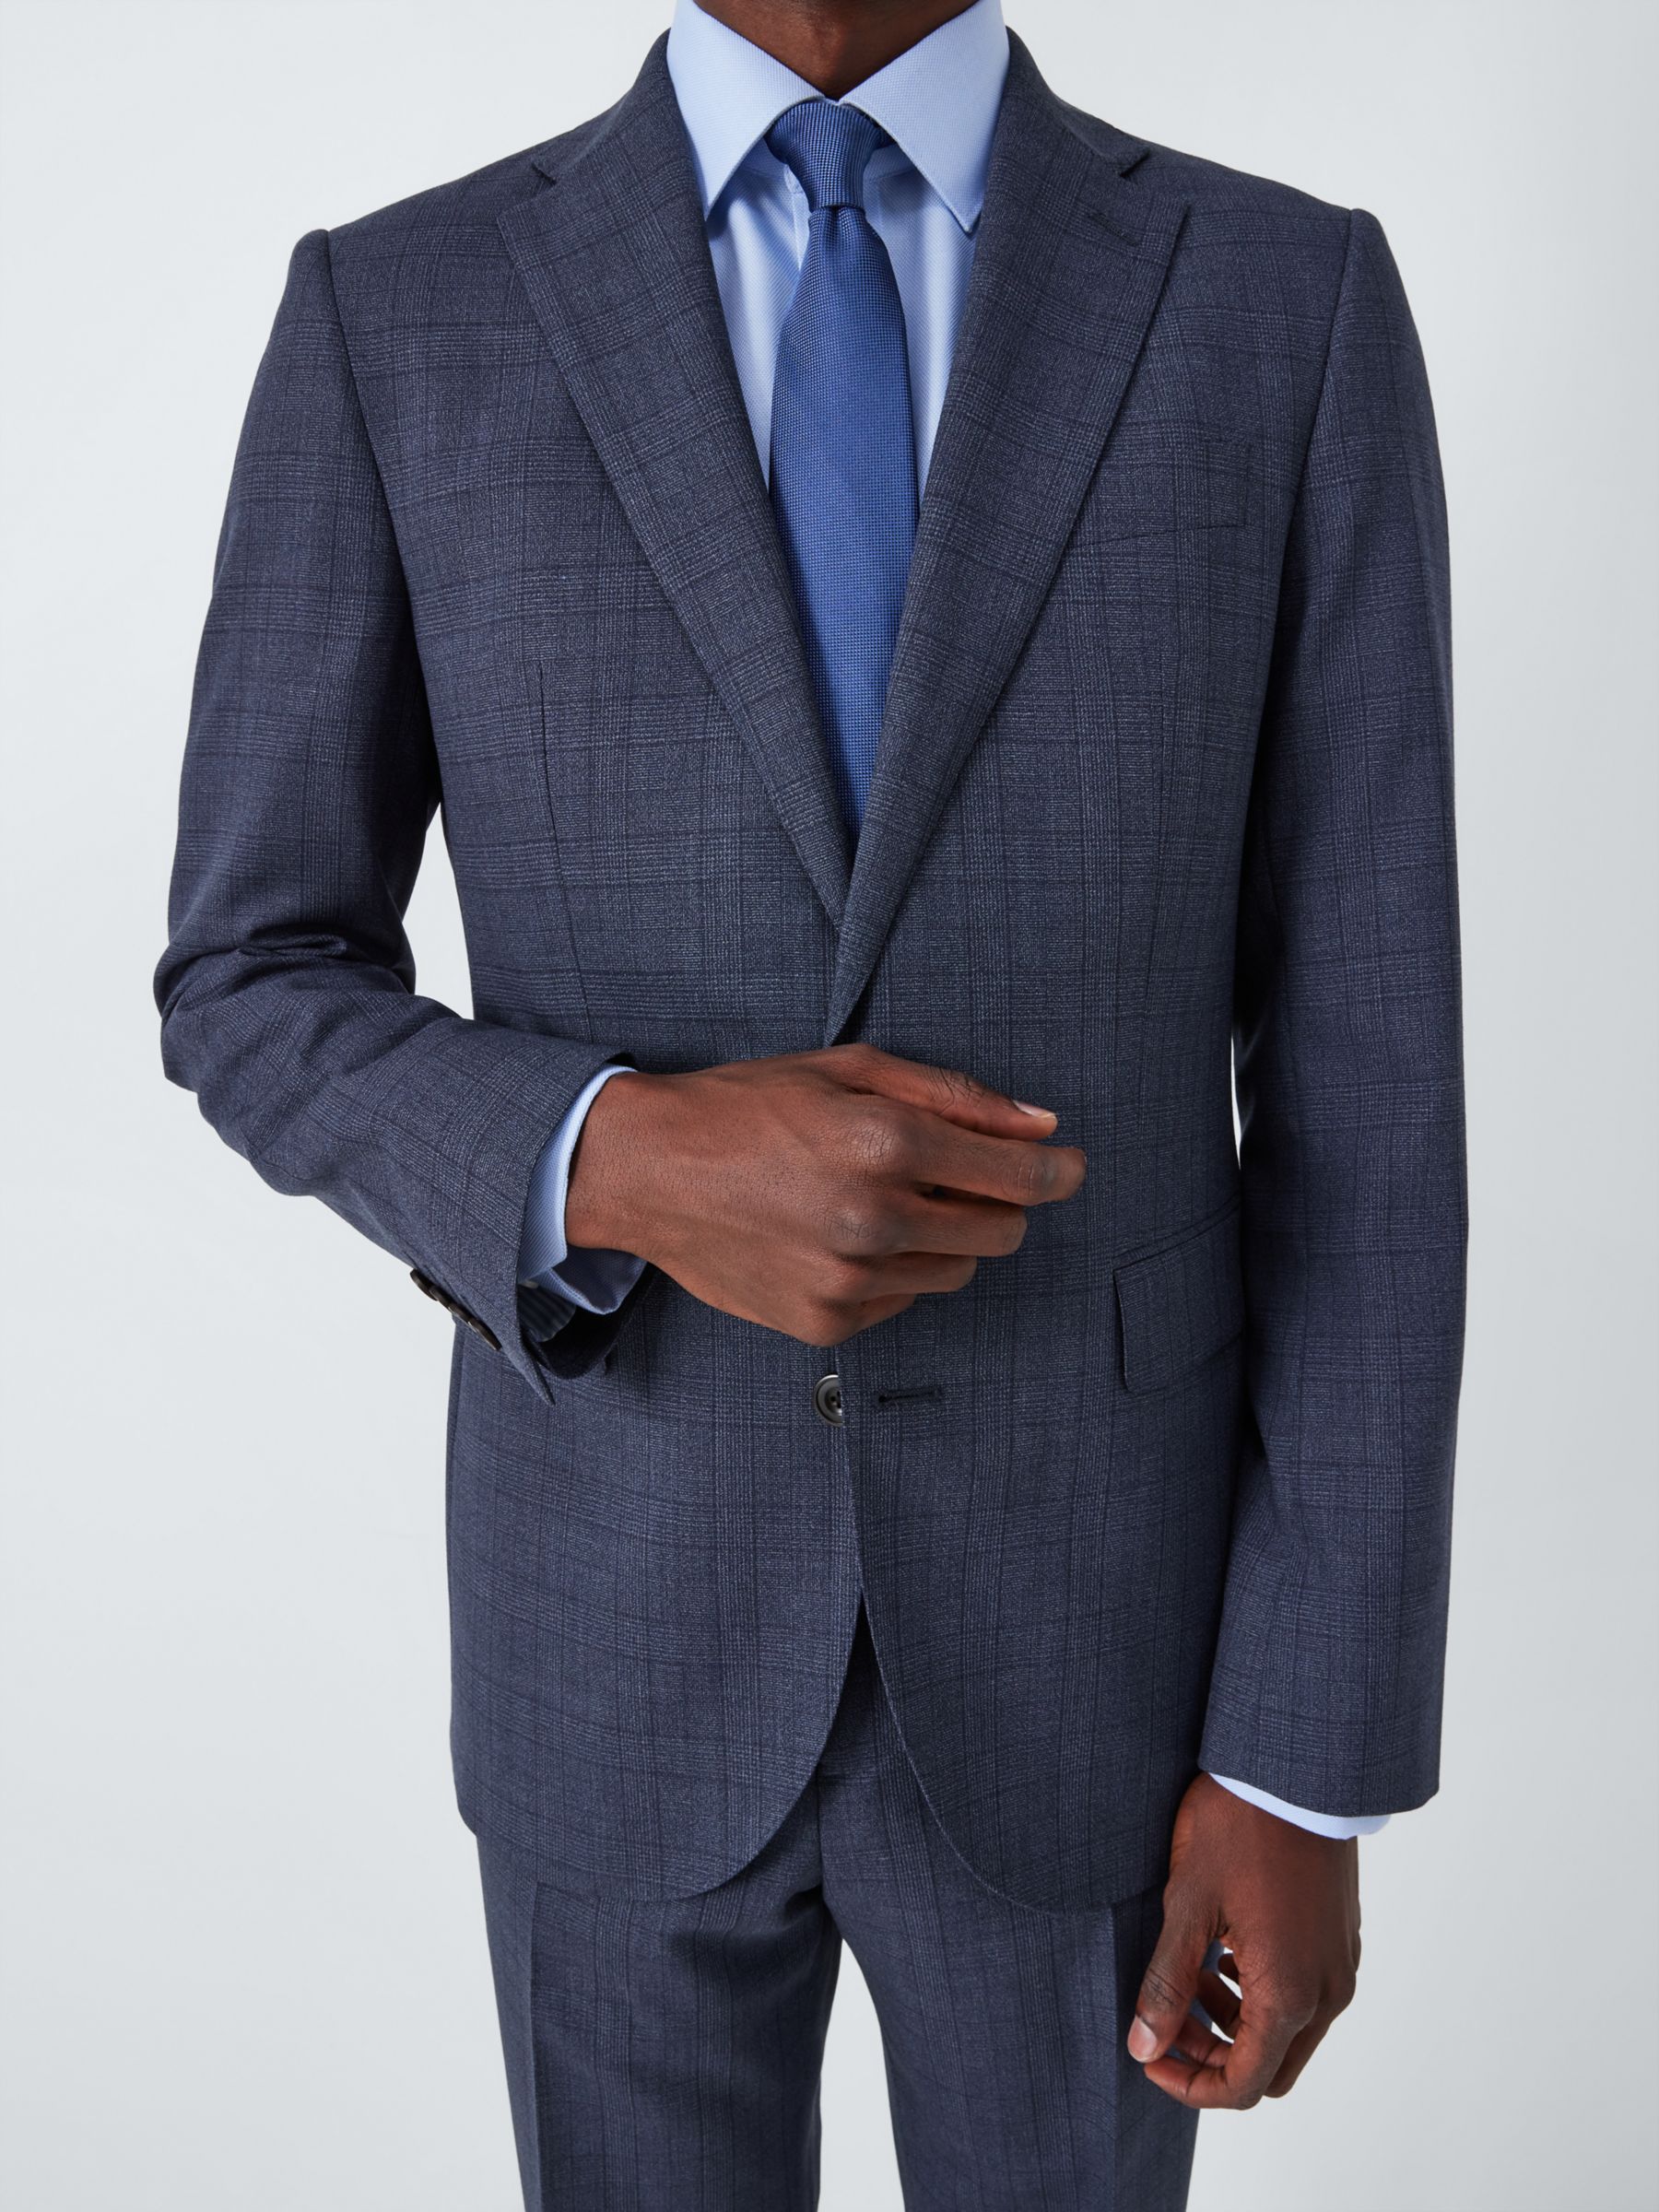 Buy John Lewis Culford Regular Fit Check Wool Suit Jacket, Navy Online at johnlewis.com